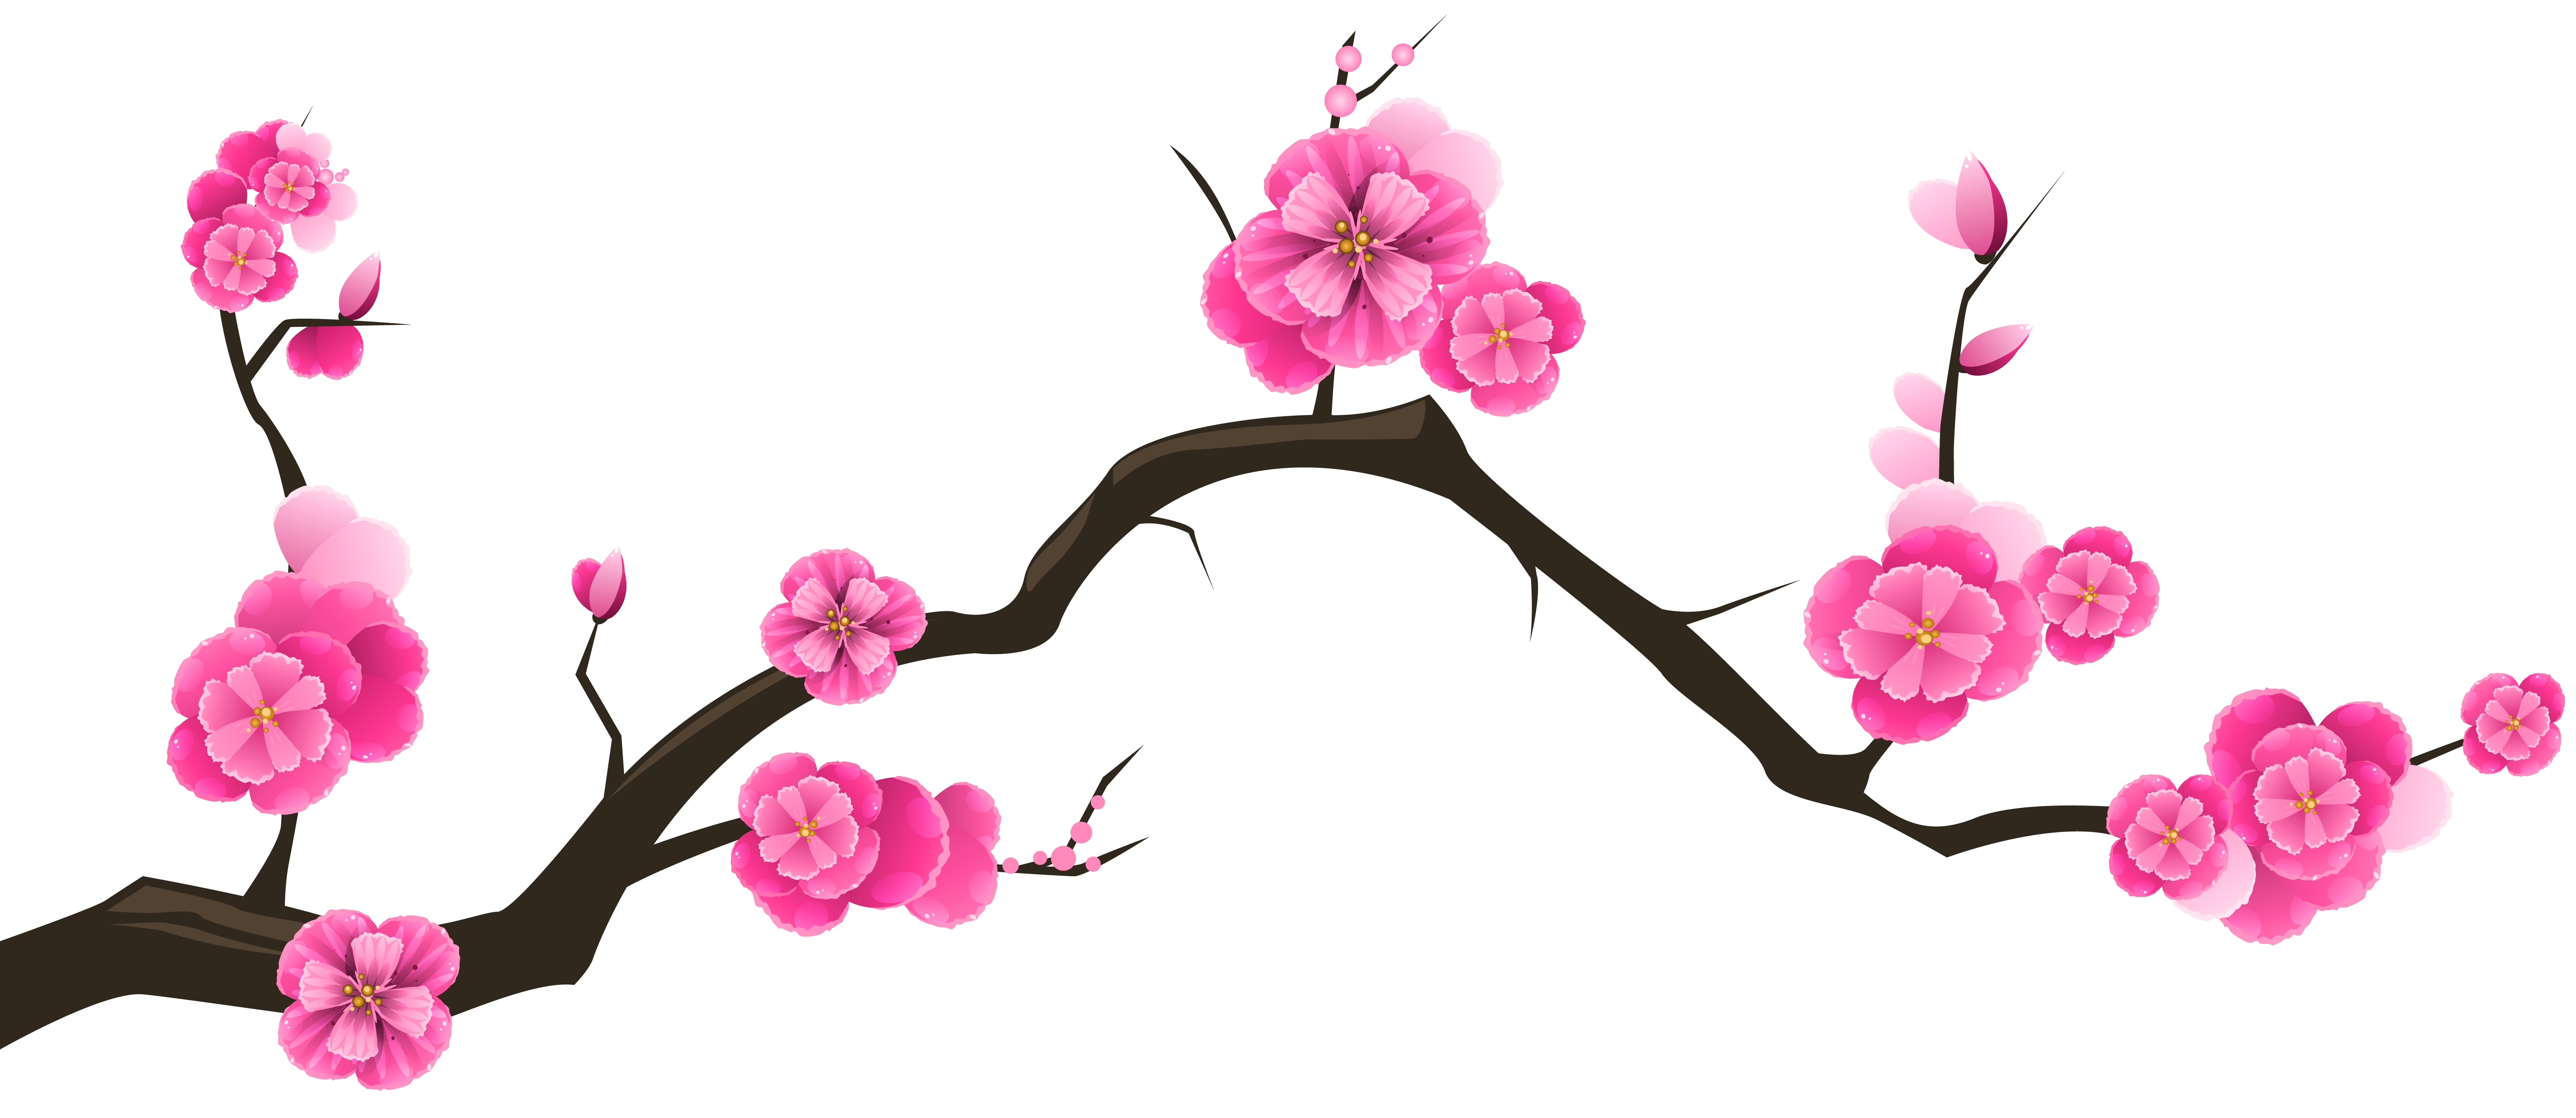 Sakura Branch Transparent Clip Art Image Quality Image And Transparent PNG Free Clipart